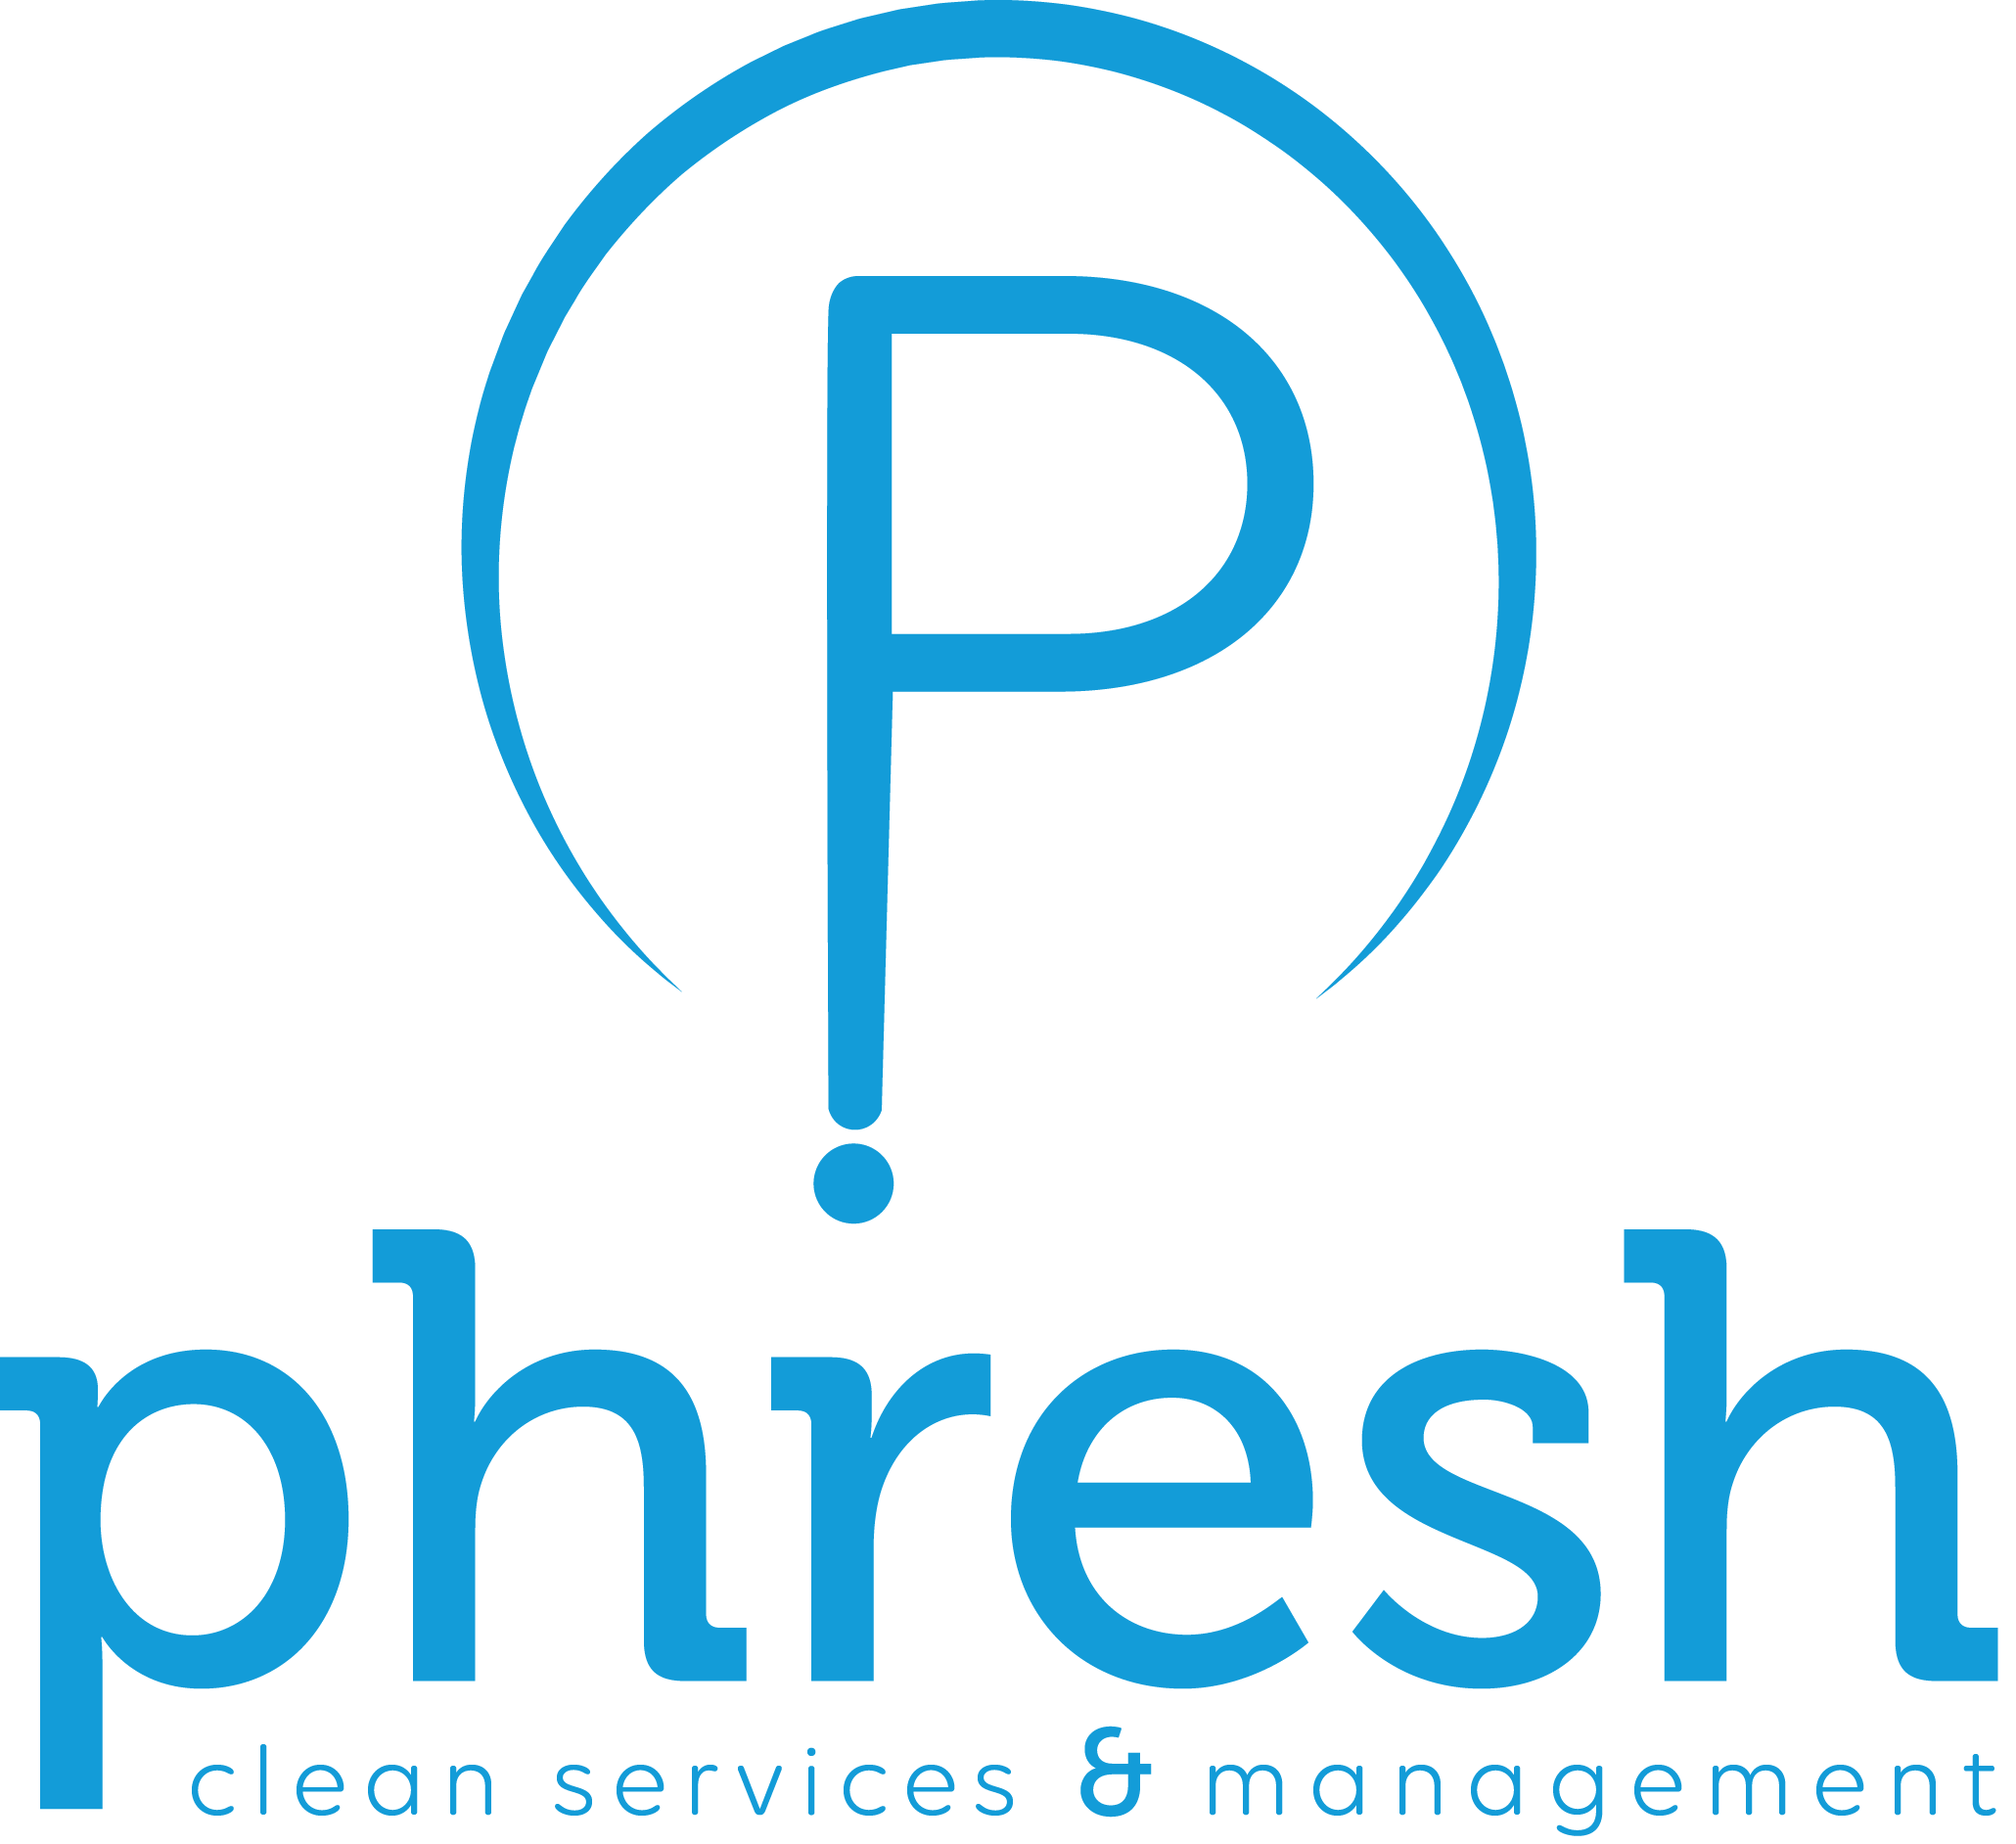 Phresh Clean Services